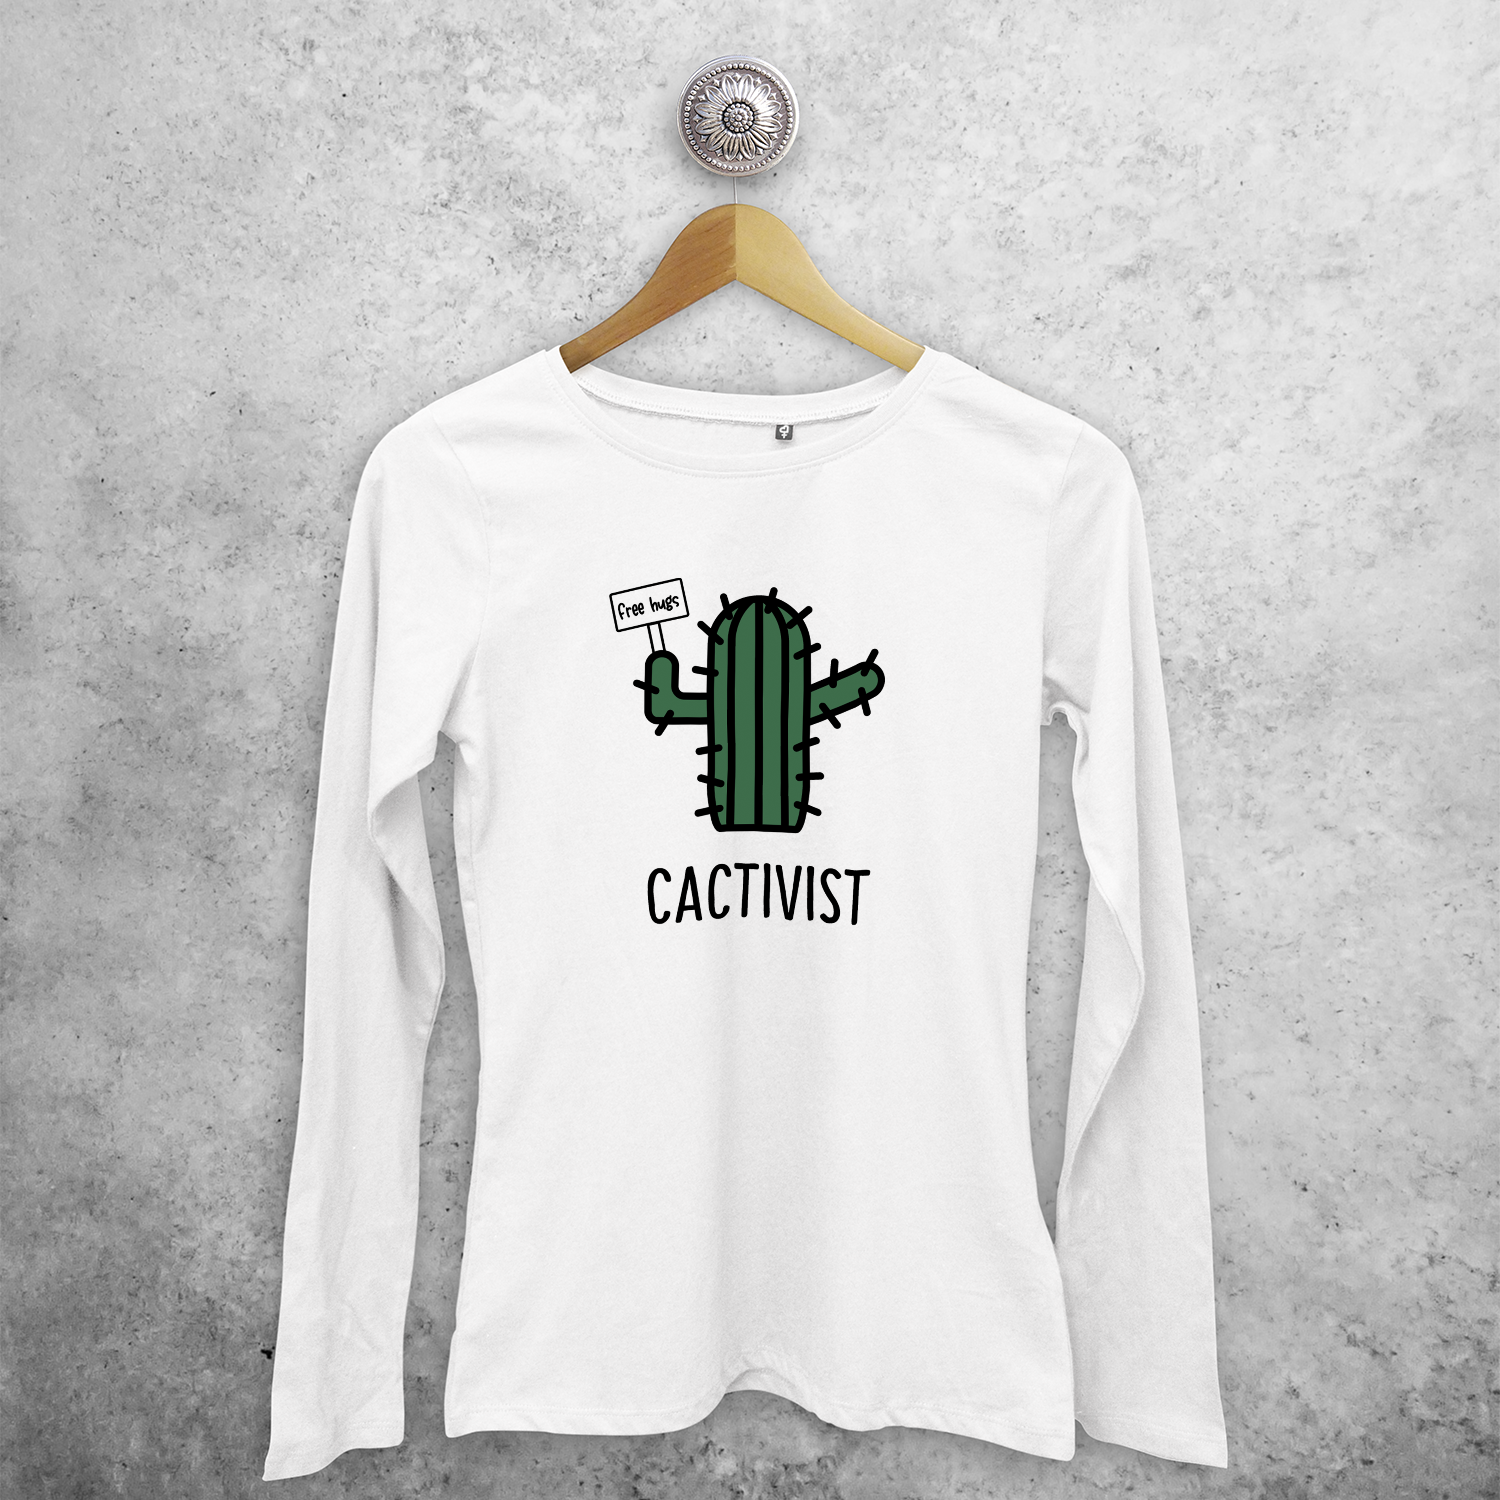 Cactivist' volwassene shirt met lange mouwen